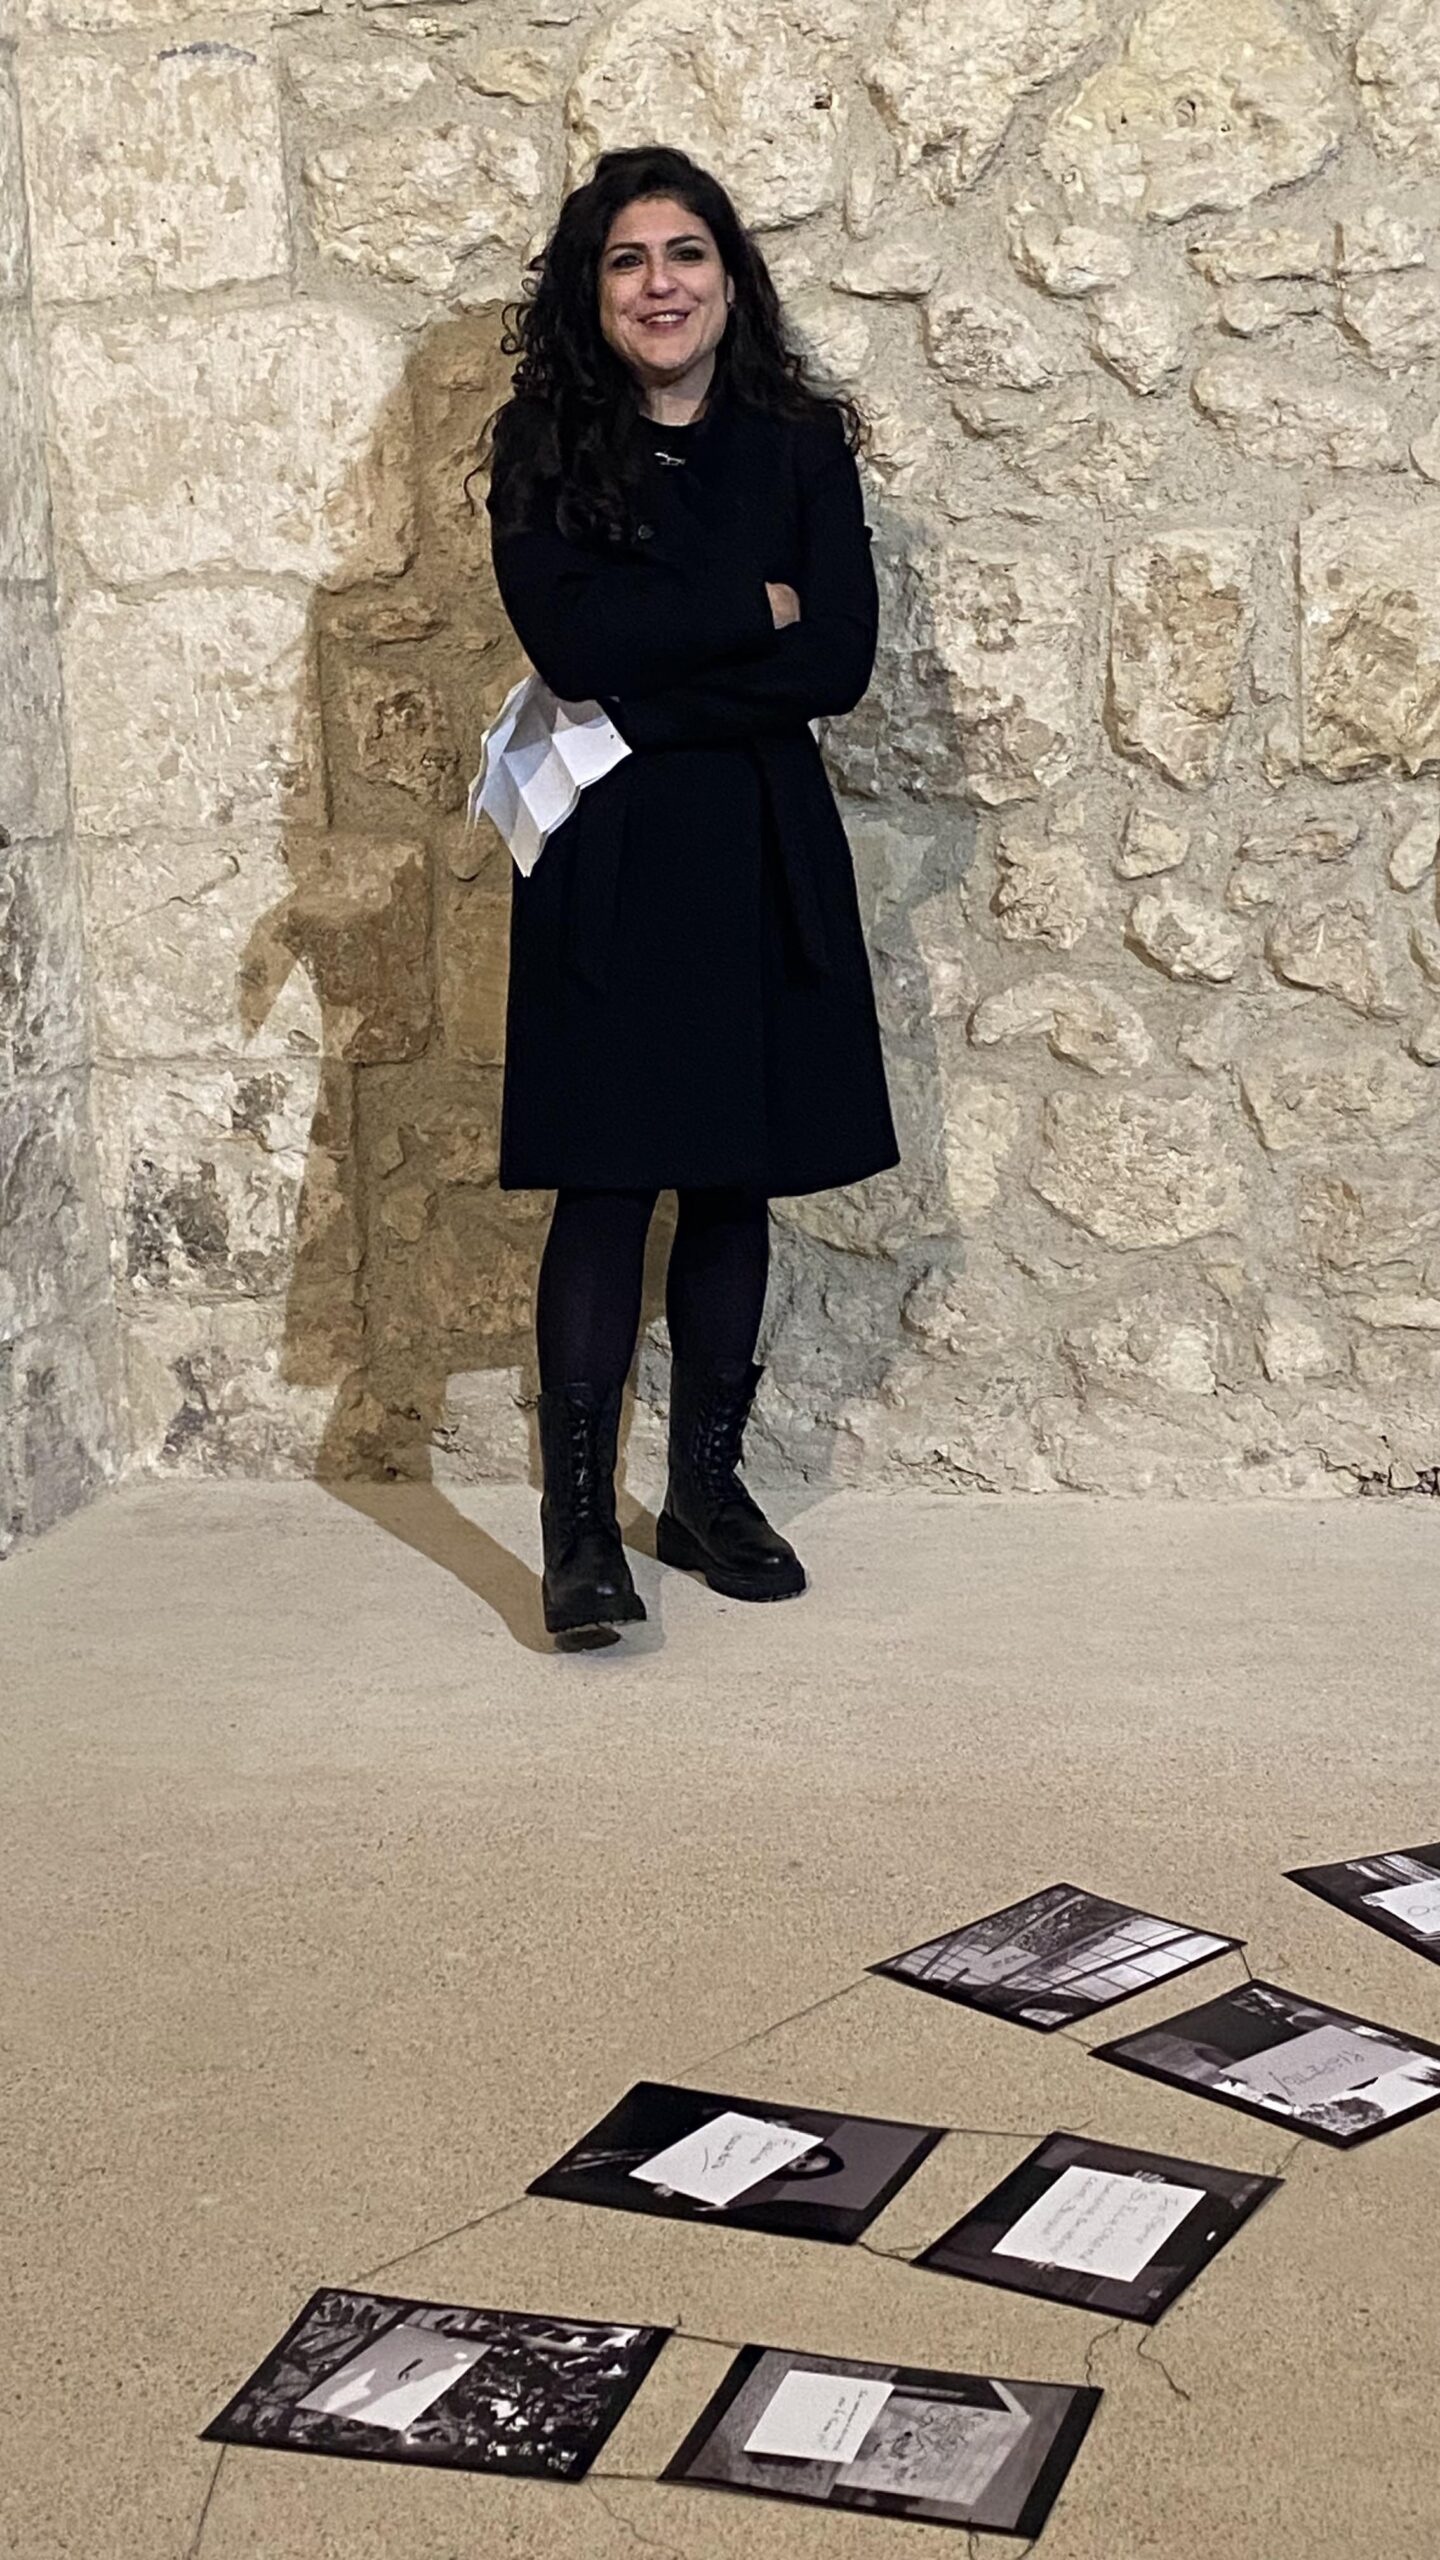 Roberta Congiu at Impressions installation opening